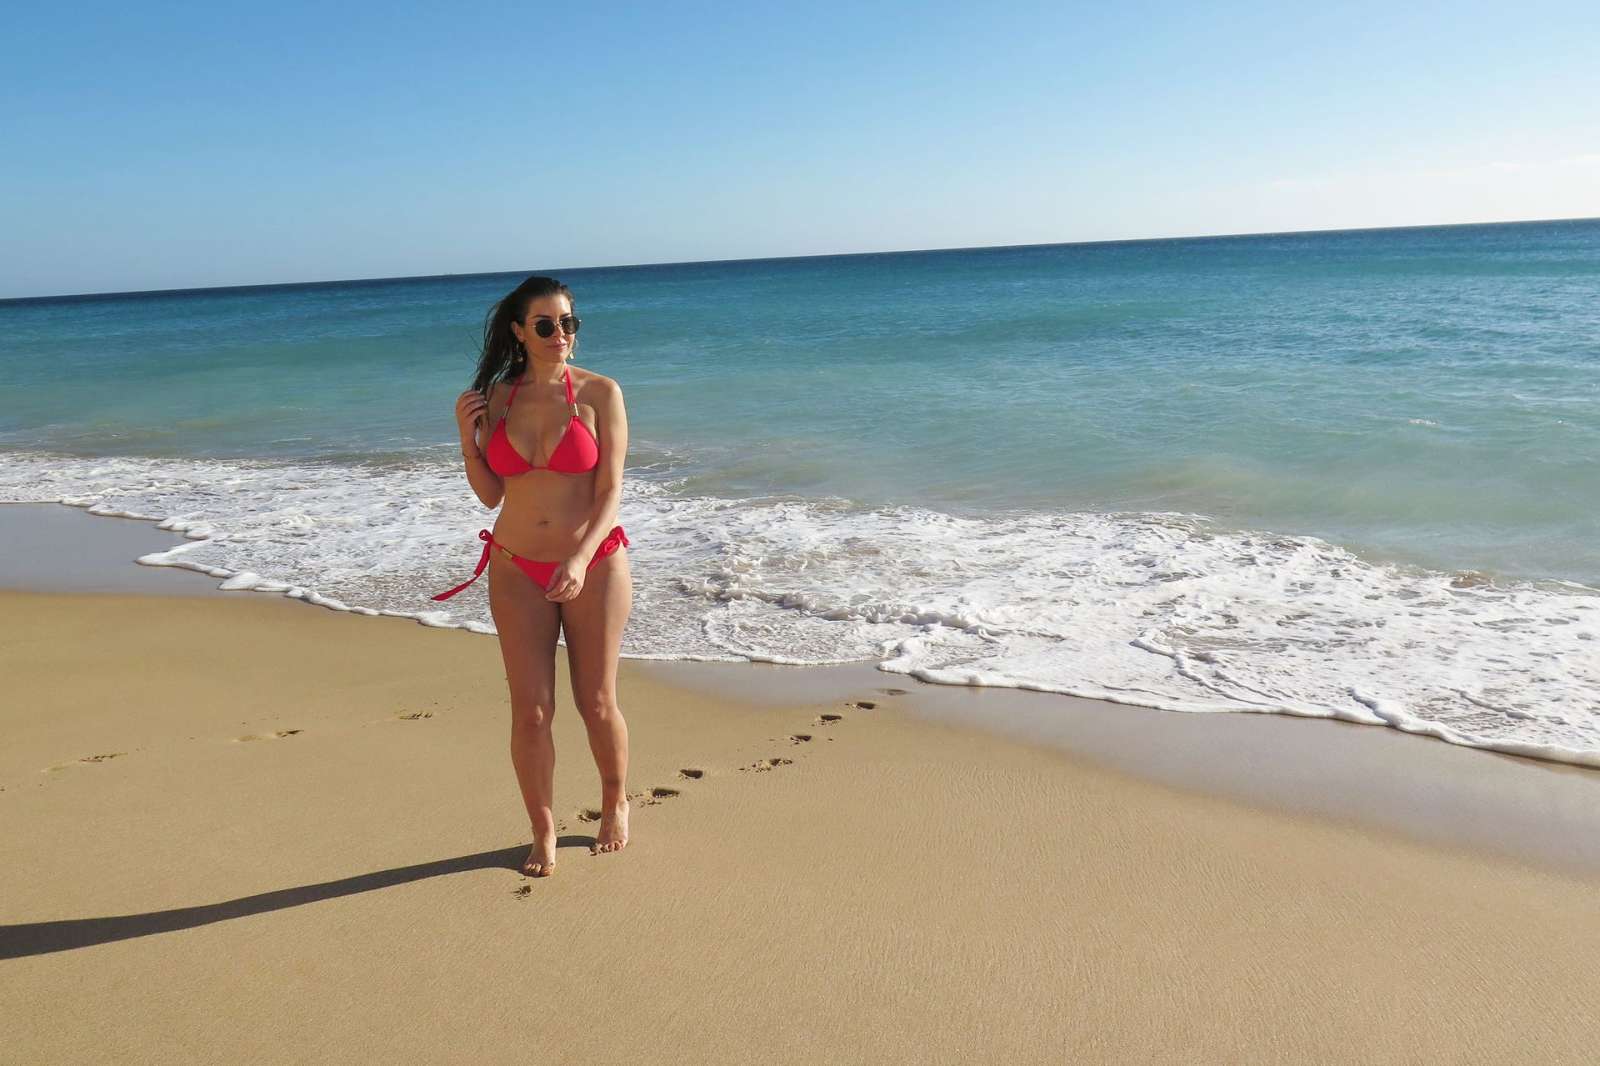 Imogen Thomas in Red Bikini on a beach in Portugal